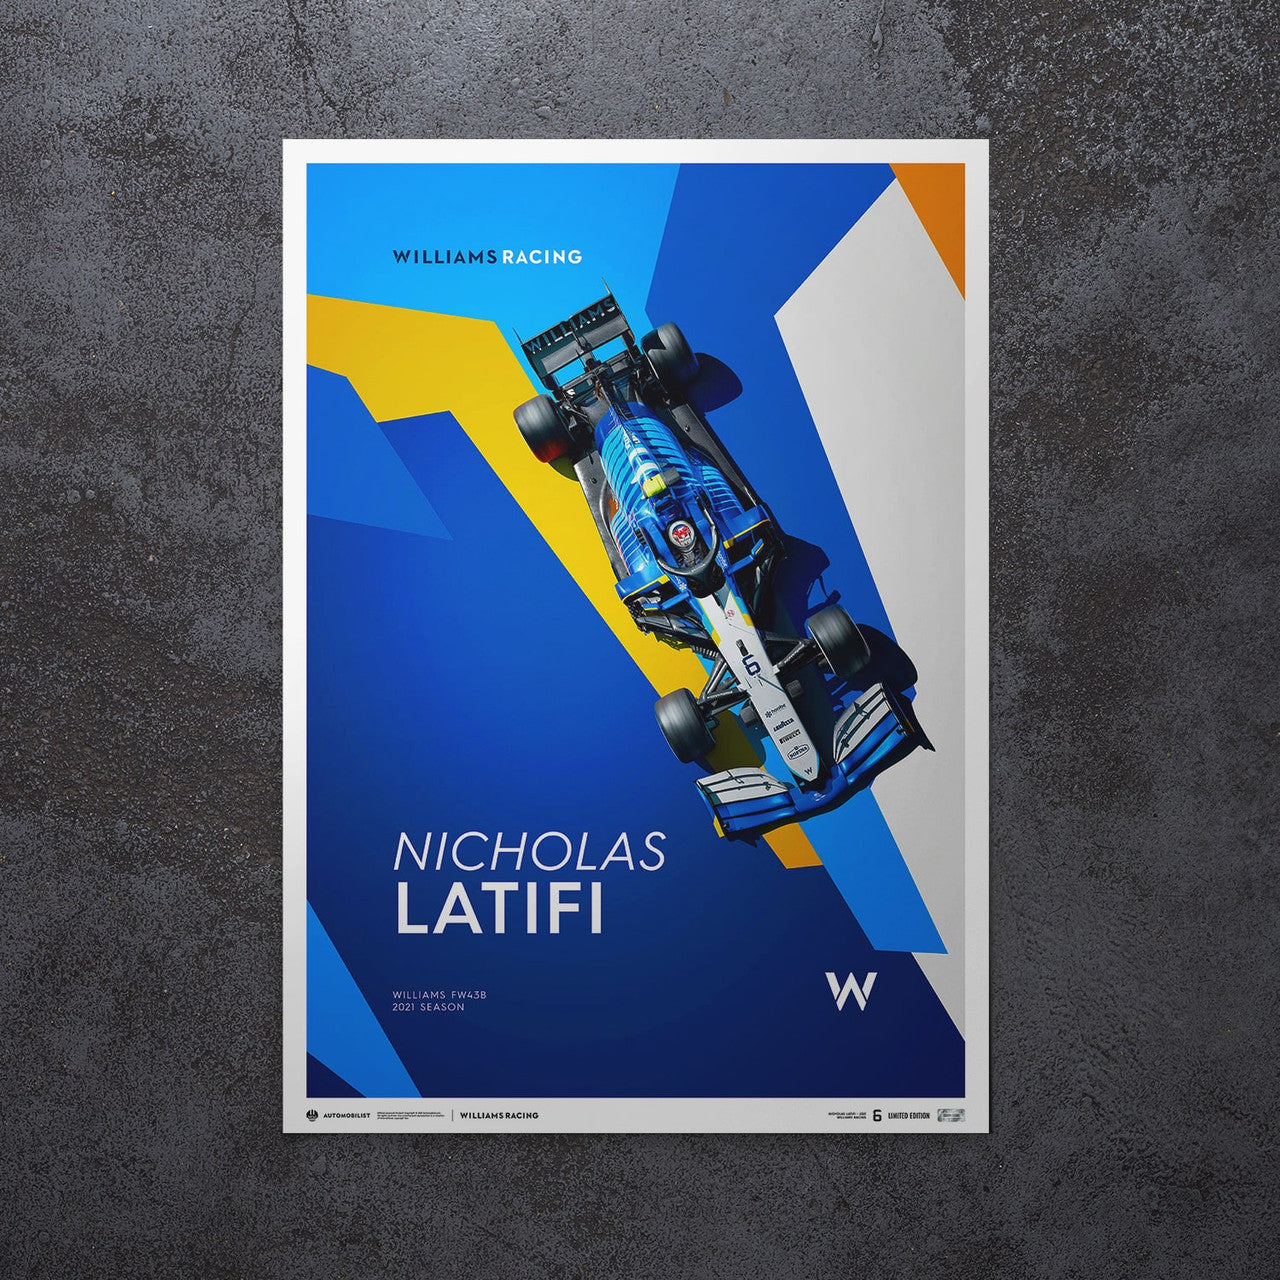 Williams Racing - Nicolas Latifi - 2021 | Limited Edition